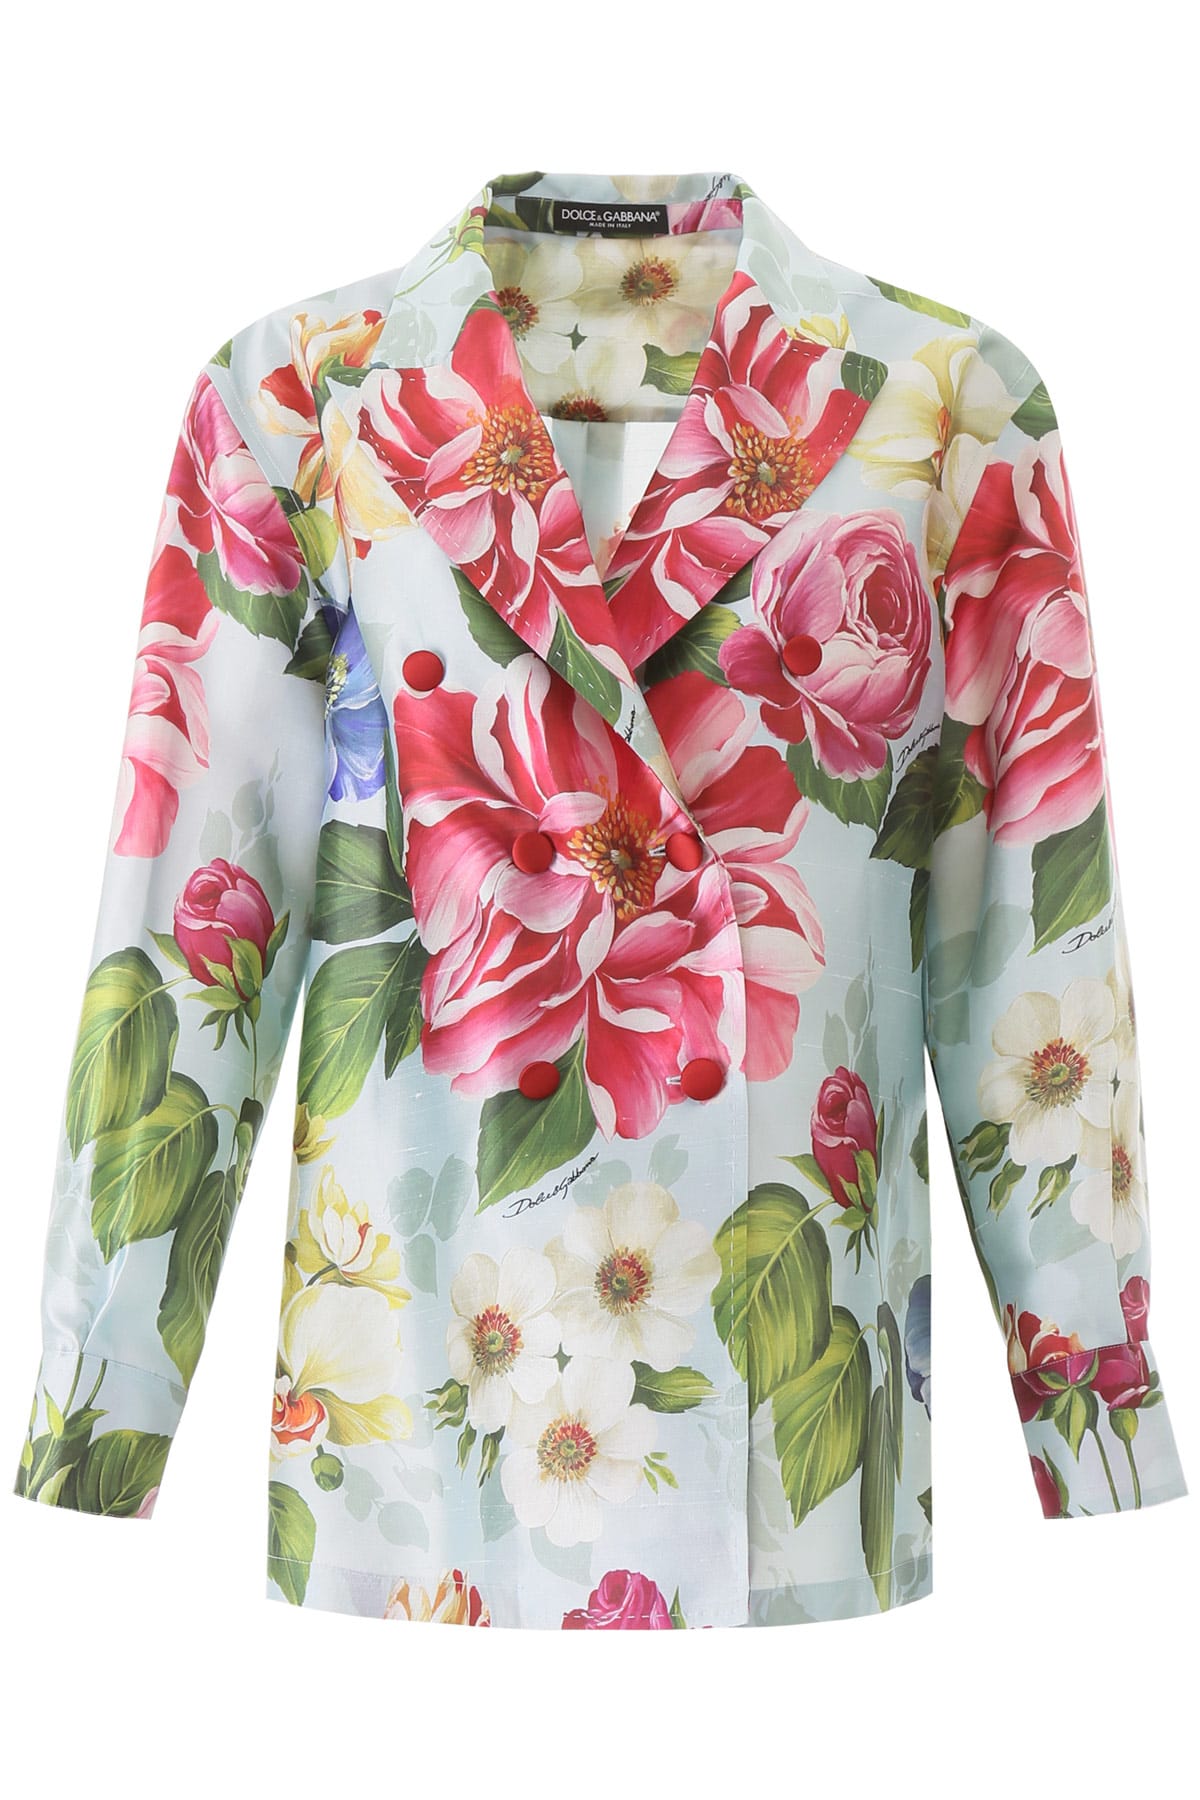 Dolce & Gabbana Floral Shantung Jacket